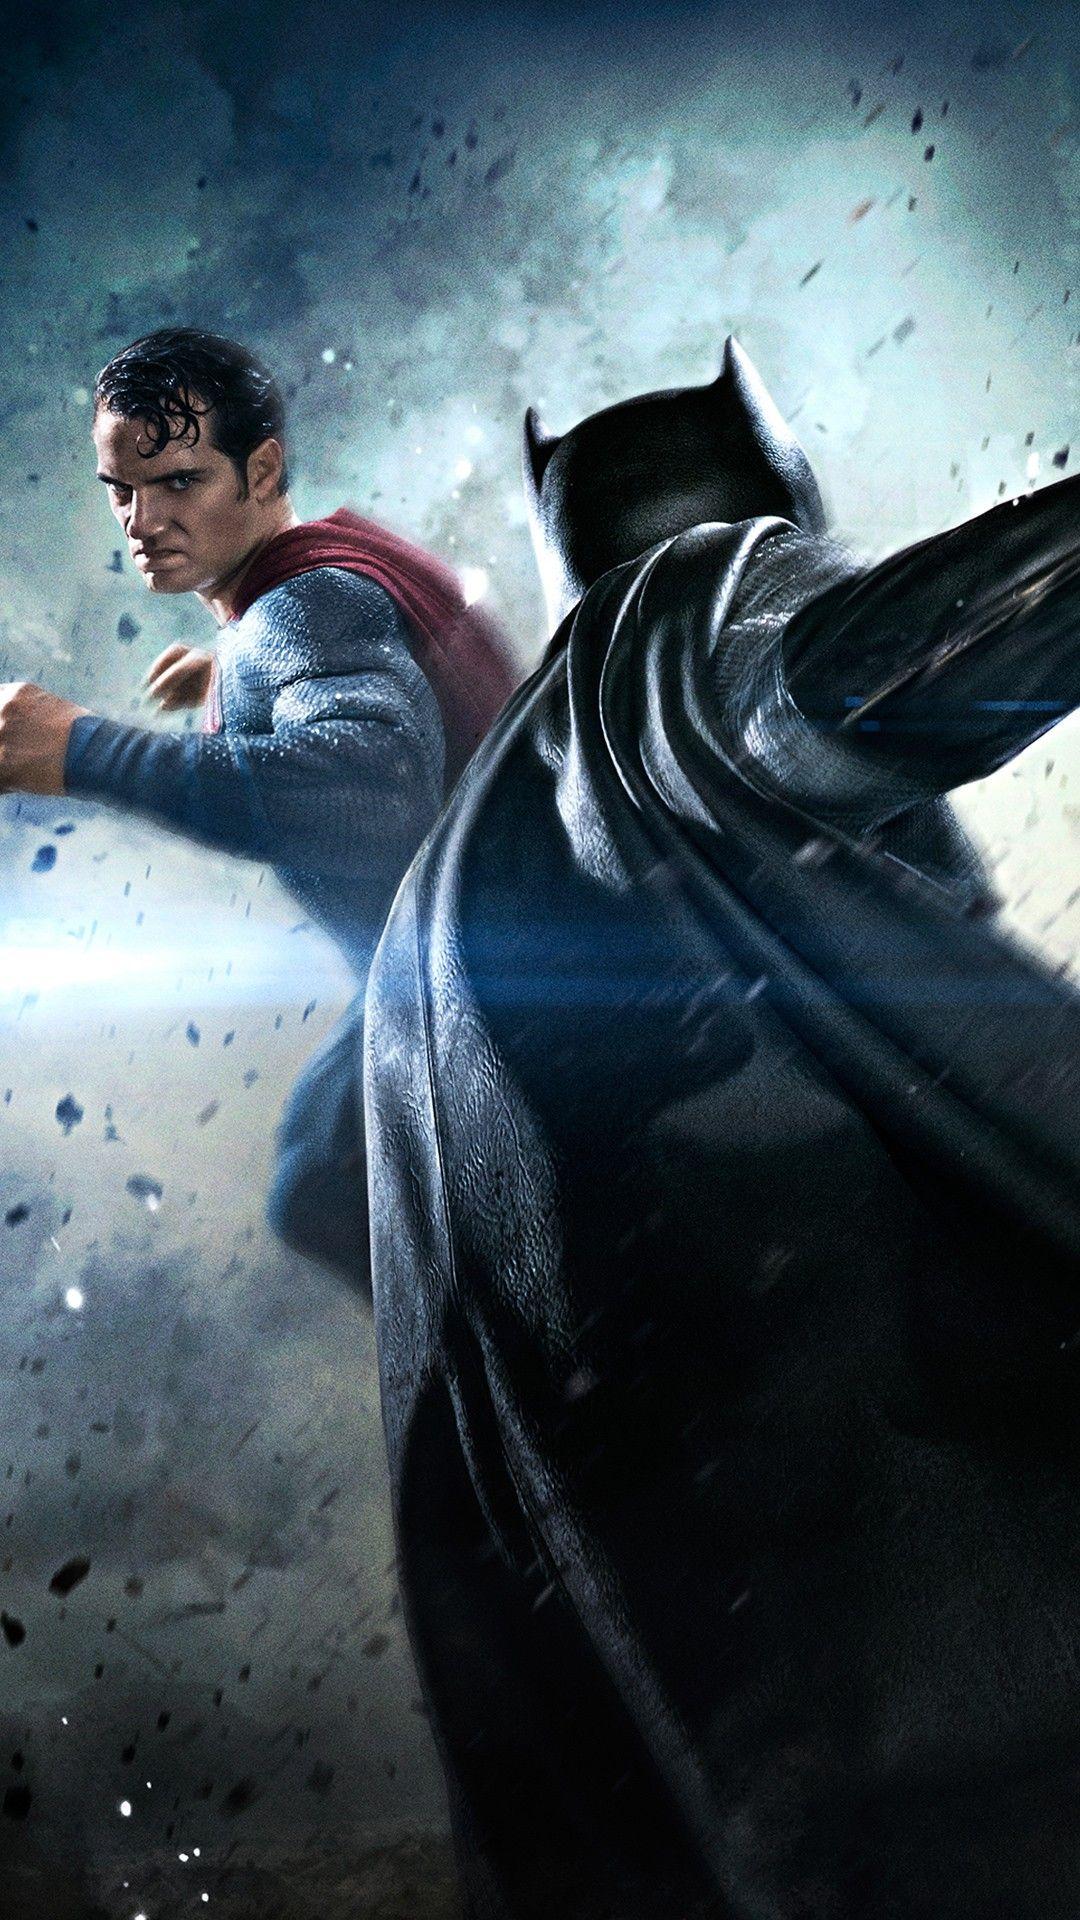 Batman vs Superman Fight Smartphone Wallpaper and Lockscreen HD